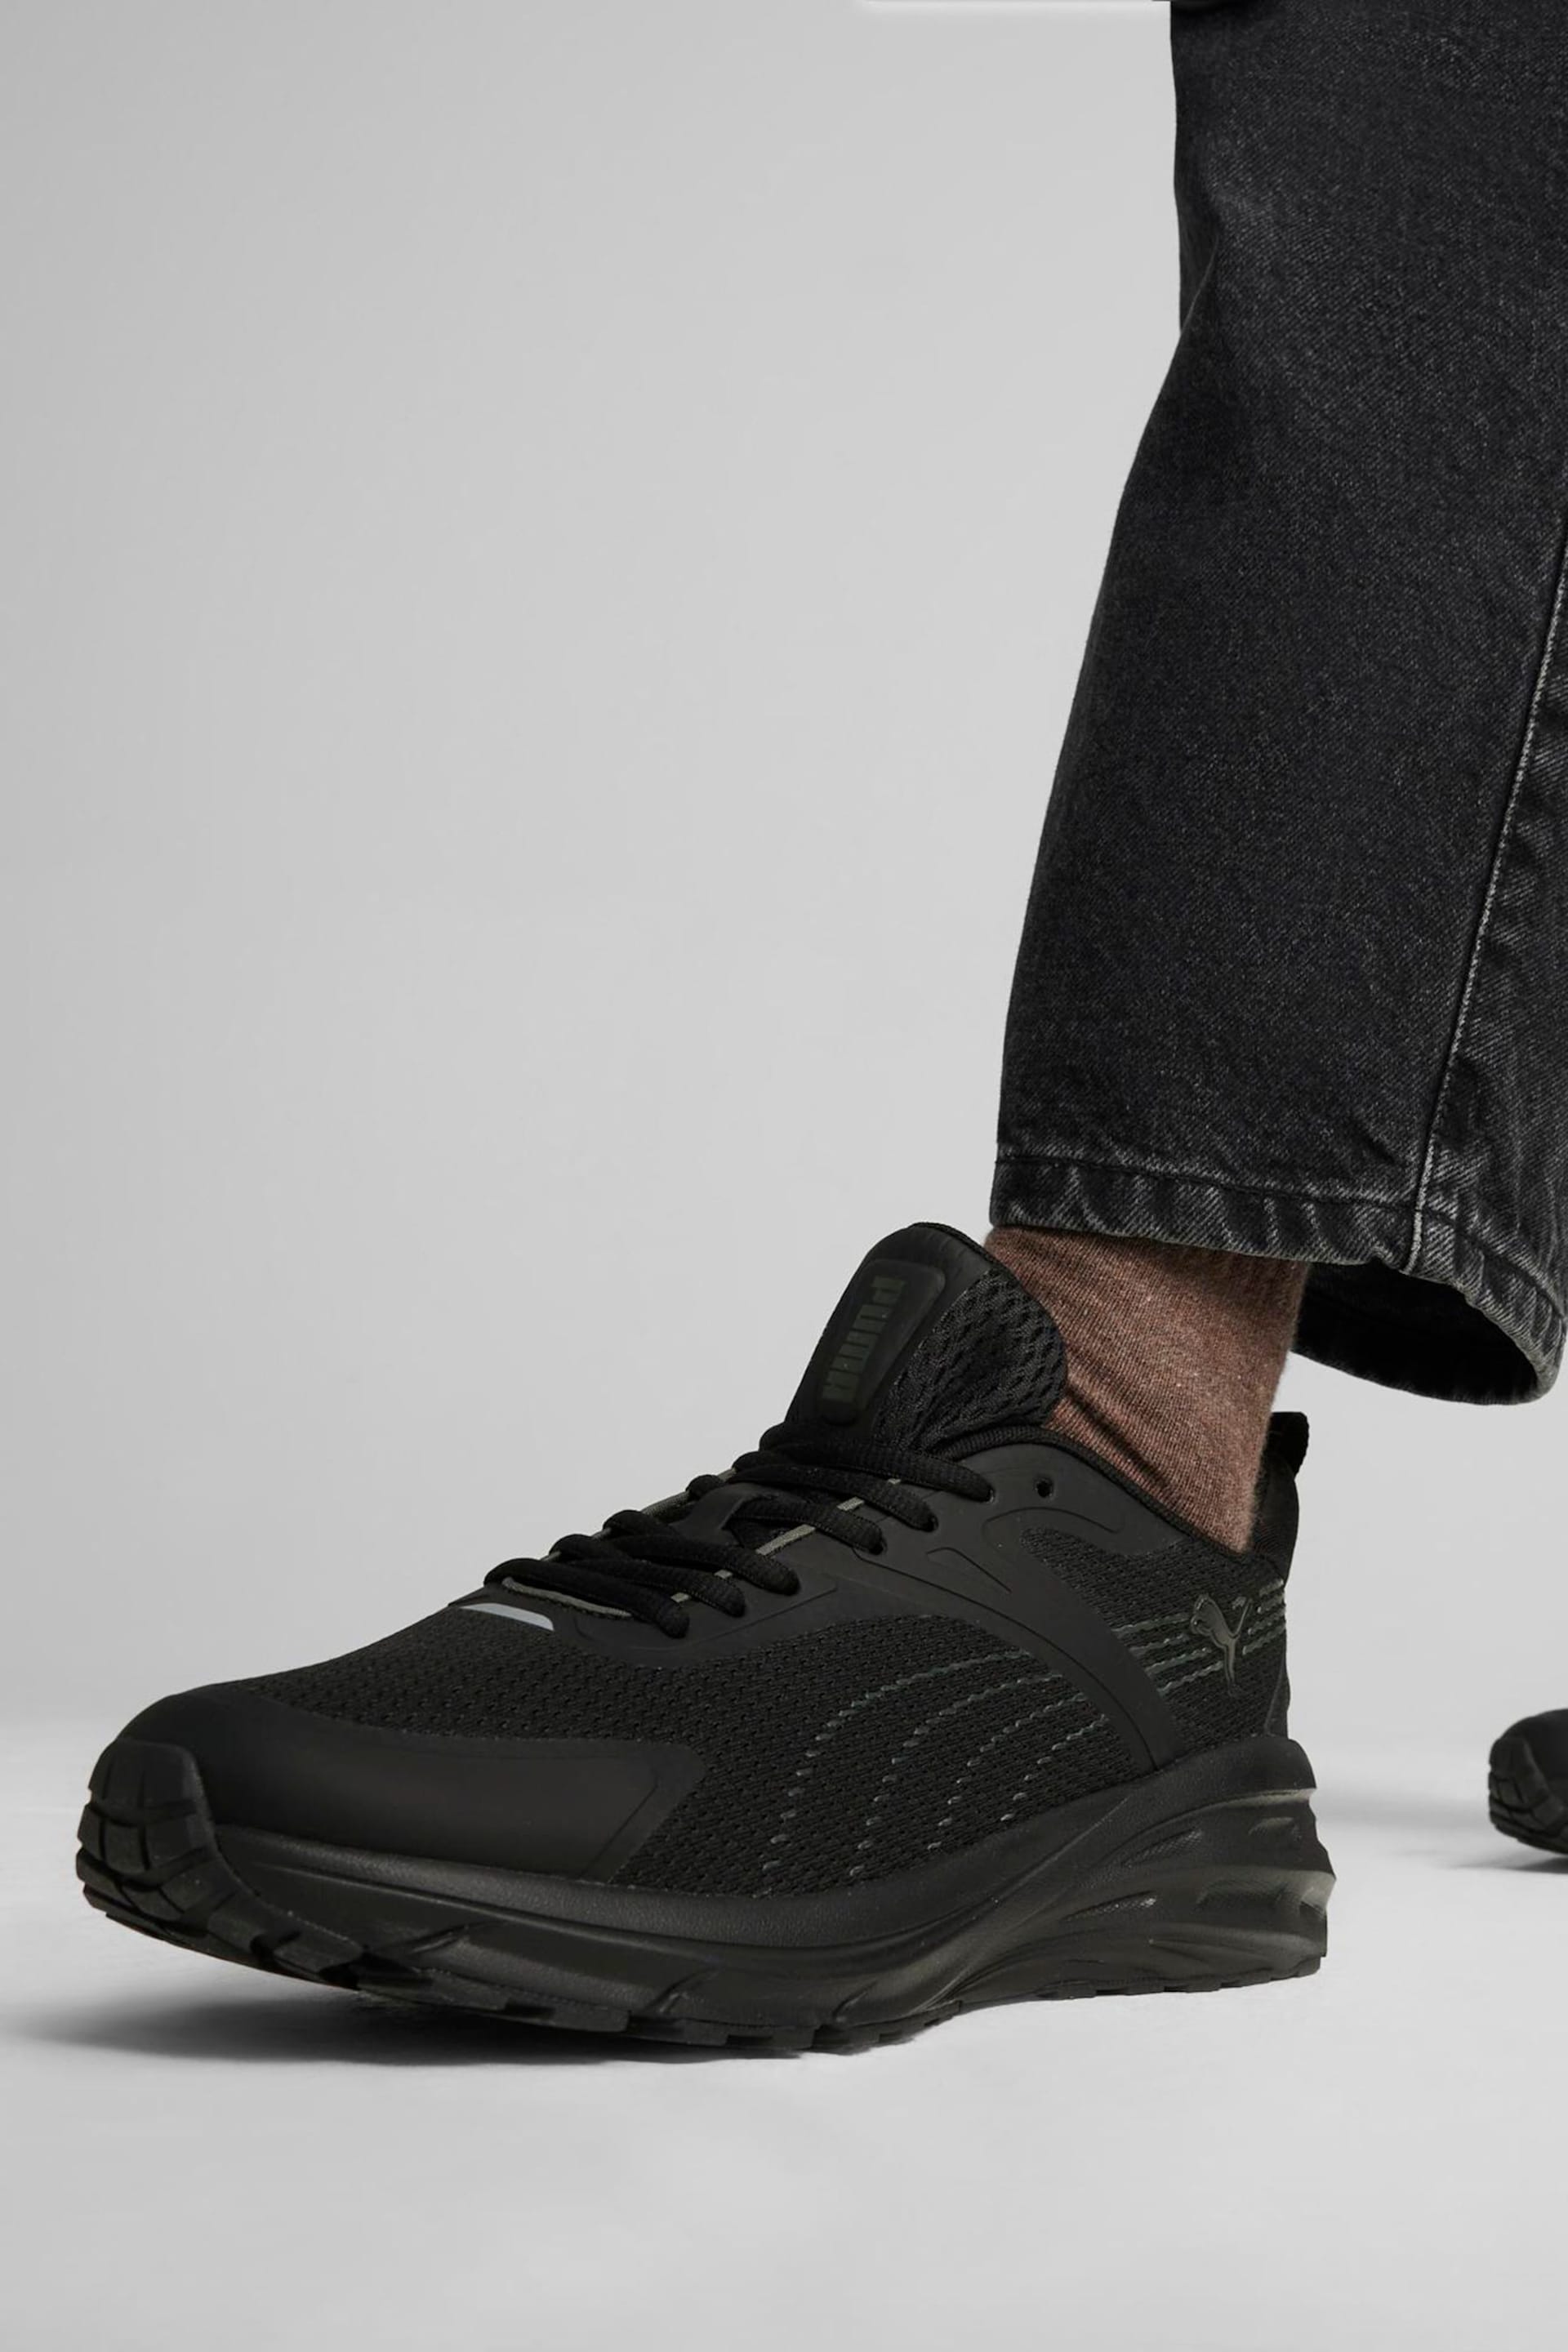 Puma Black Mens Hypnotic Sneakers - Image 8 of 8